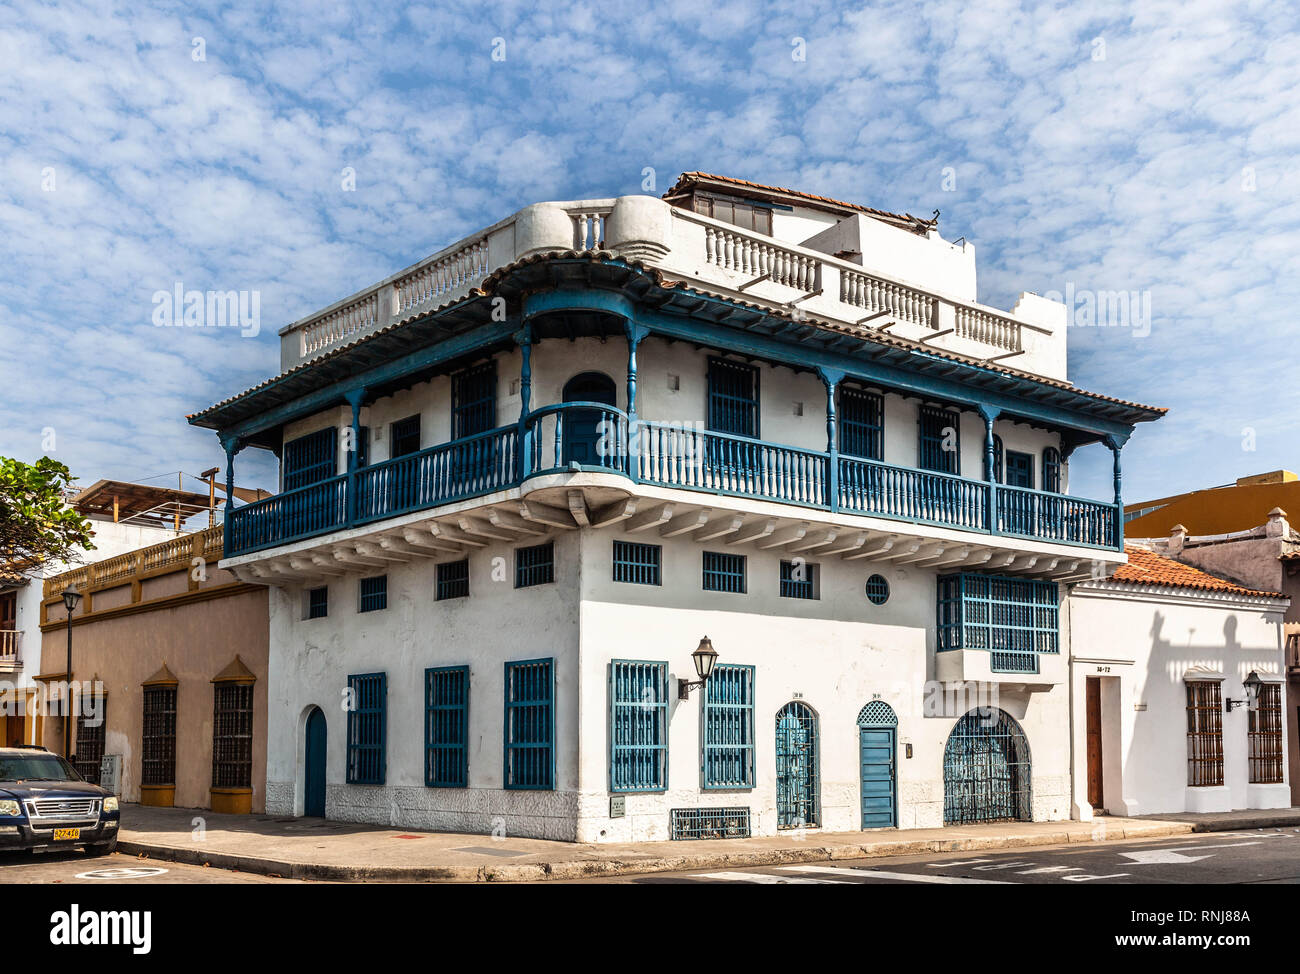 Spanish colonial architecture building, Cartagena de Indias, Colombia. Stock Photo